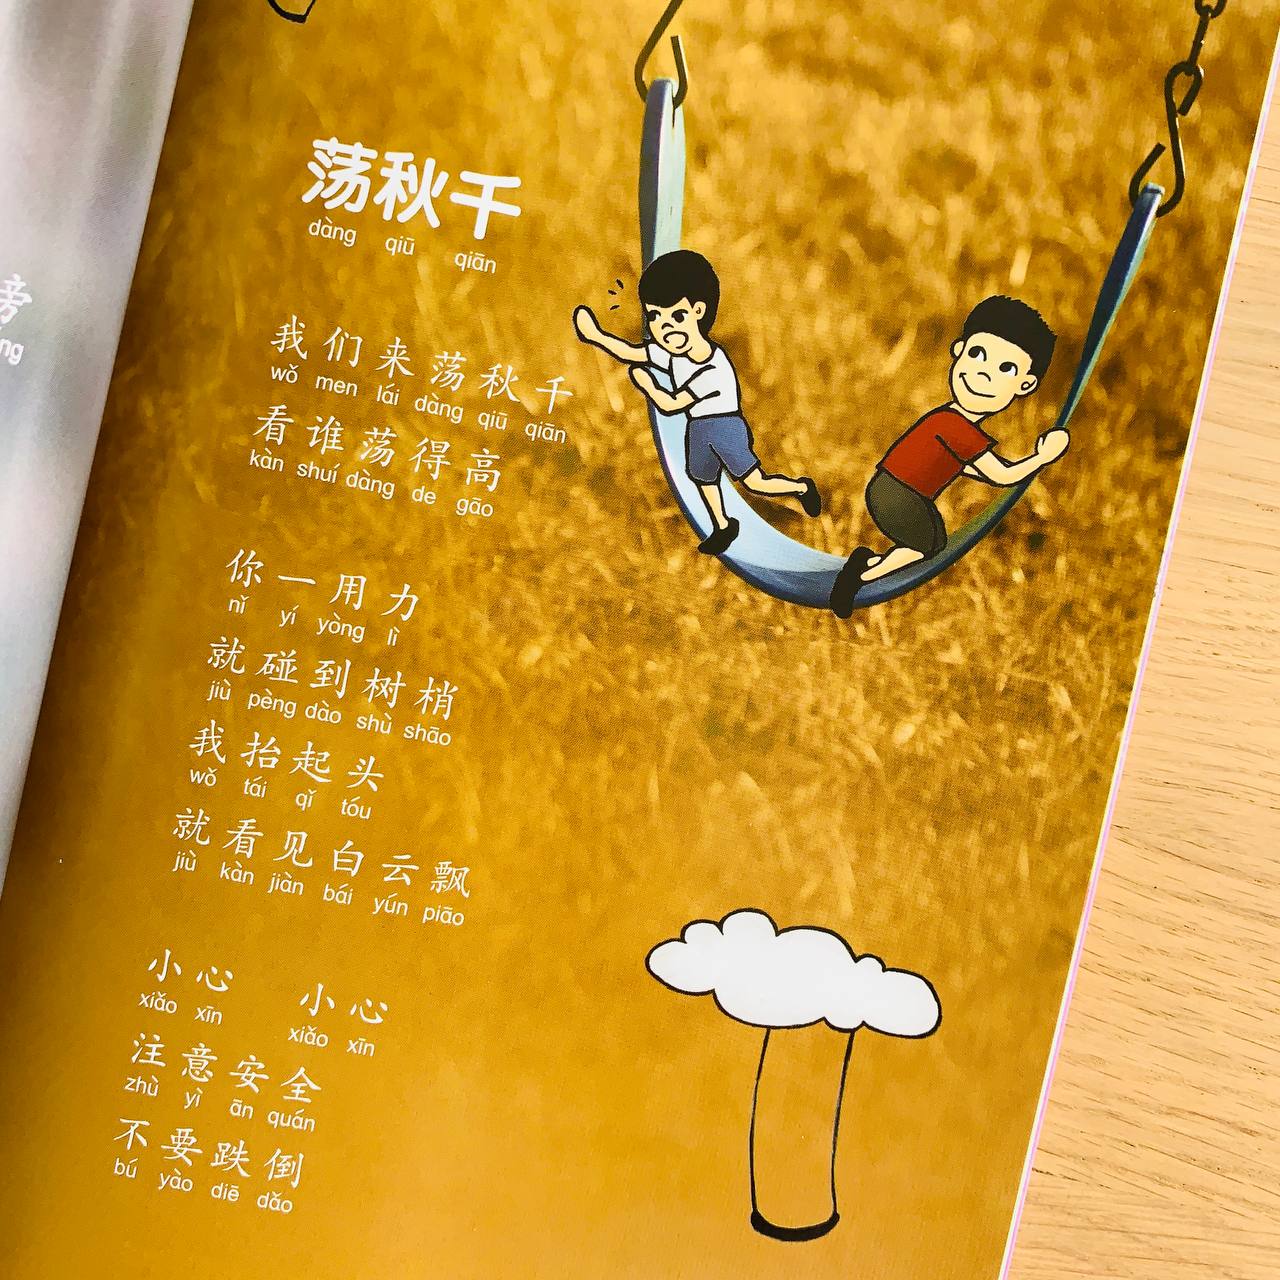 周爷爷童诗选 Grandpa Zhou's Poems for Kids (Set of 3)